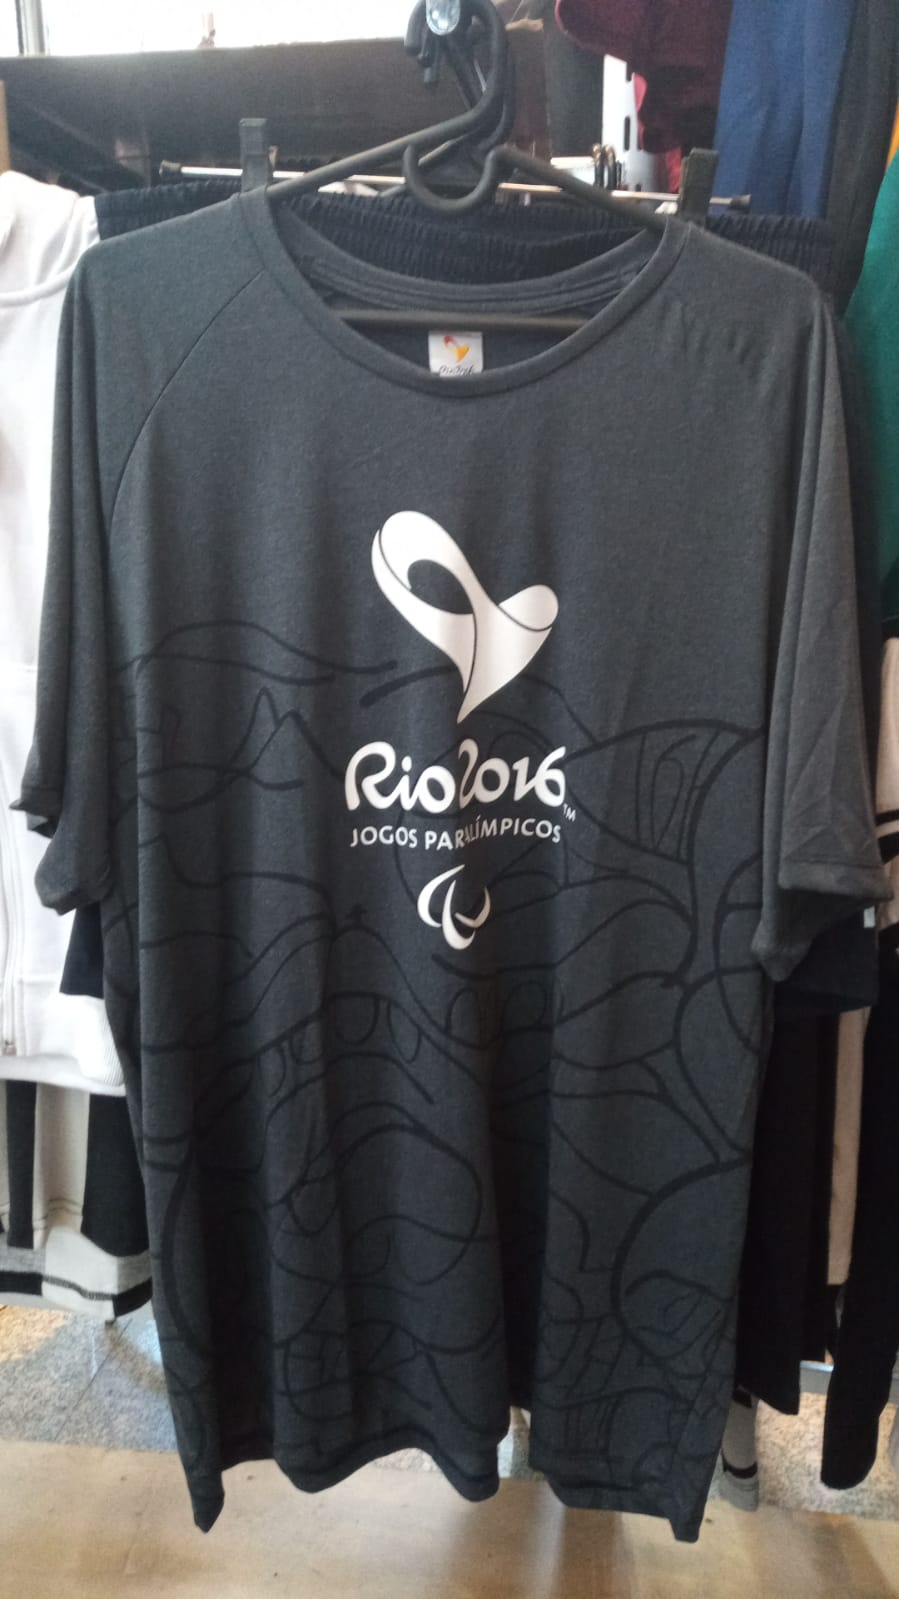 Camiseta Rio 2016 Jogos Paralímpicos leme mescla preto